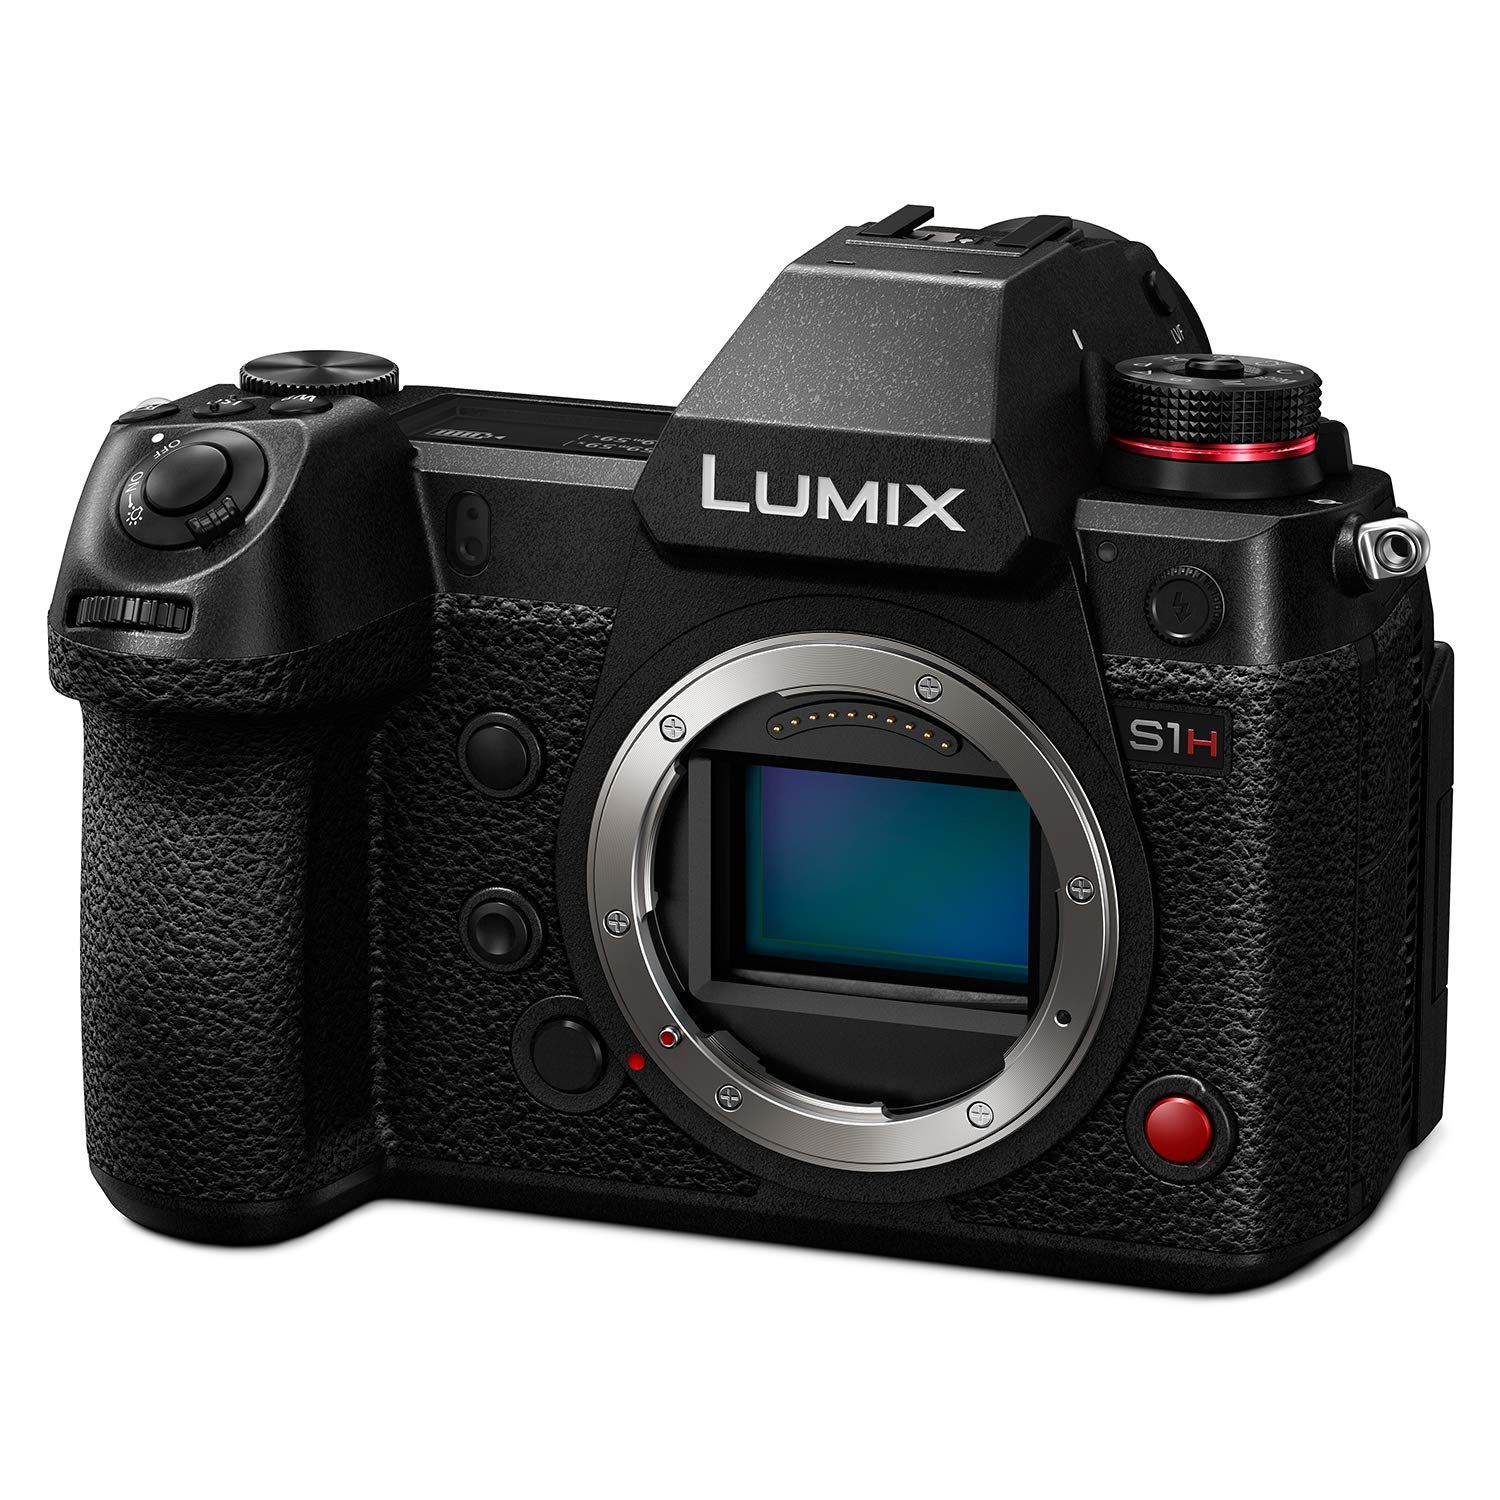 Panasonic パナソニック LUMIX S1H ミラーレスデジタルカメラ...